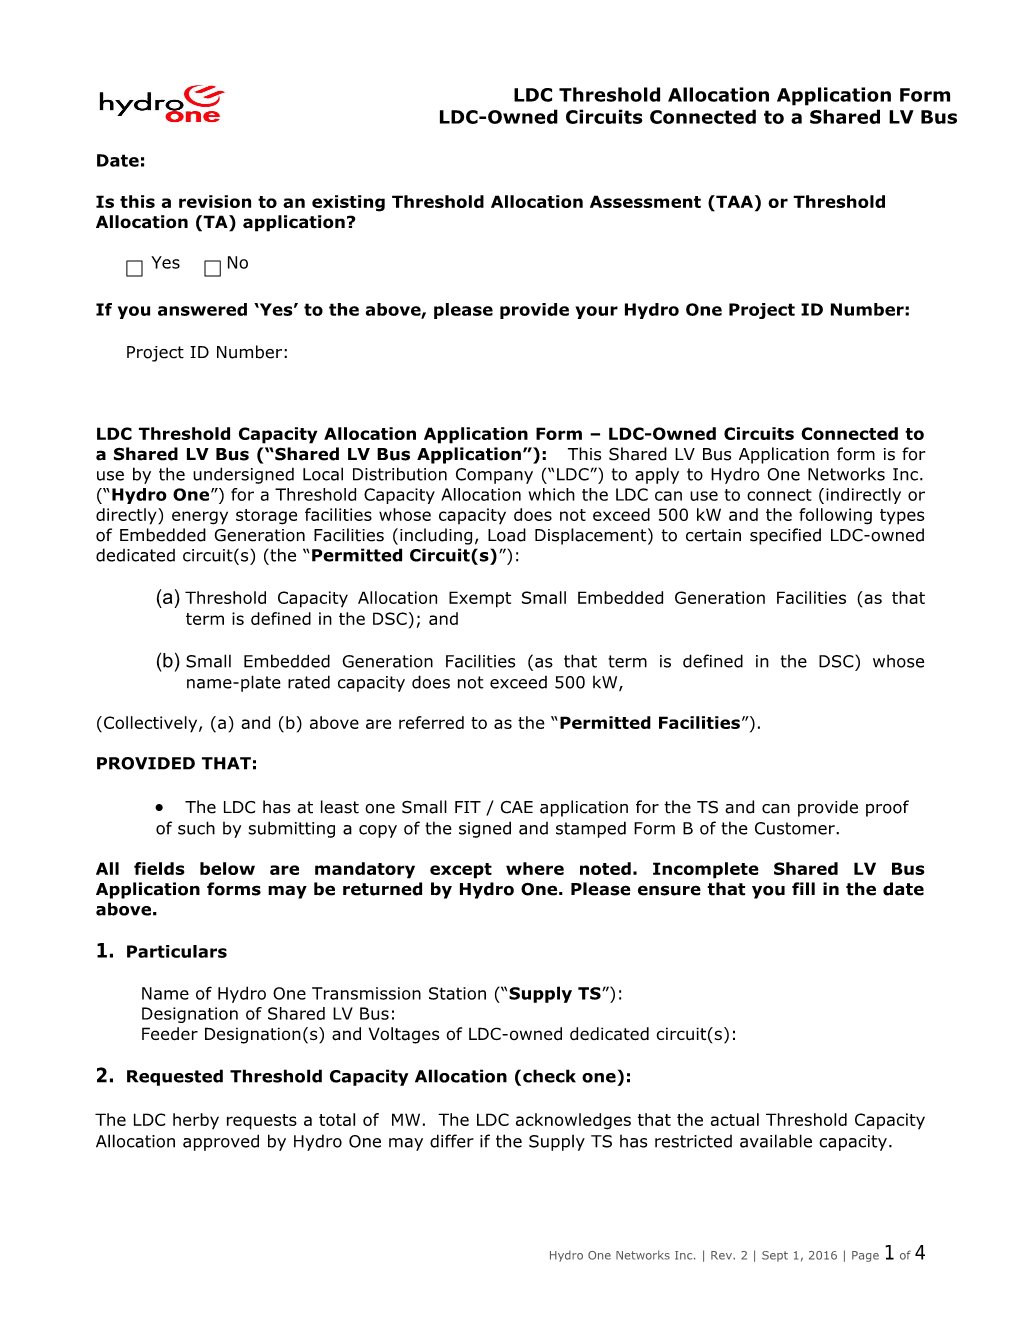 LDC Threshold CIA Application Form November 2010